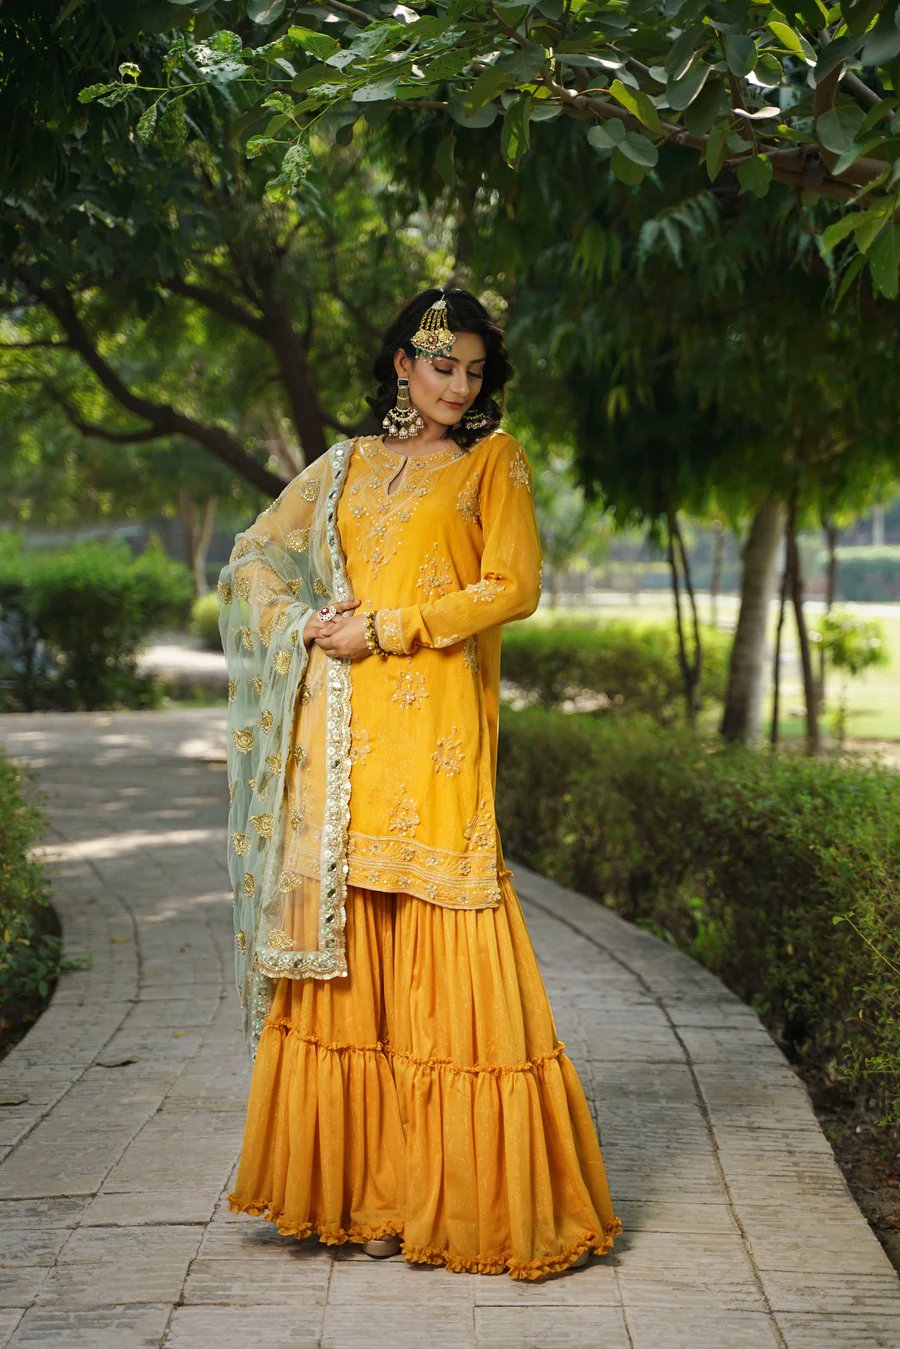 Saaj By Ankita, Saaj, Delhi fashion designer, designer Gown, Designer Saree Gown, Mehendi Outfit, Sangeet outfit, Mehendi Dress, Sangeet function look, Sangeet look, Designer Anarkali, Designer Saree Gown